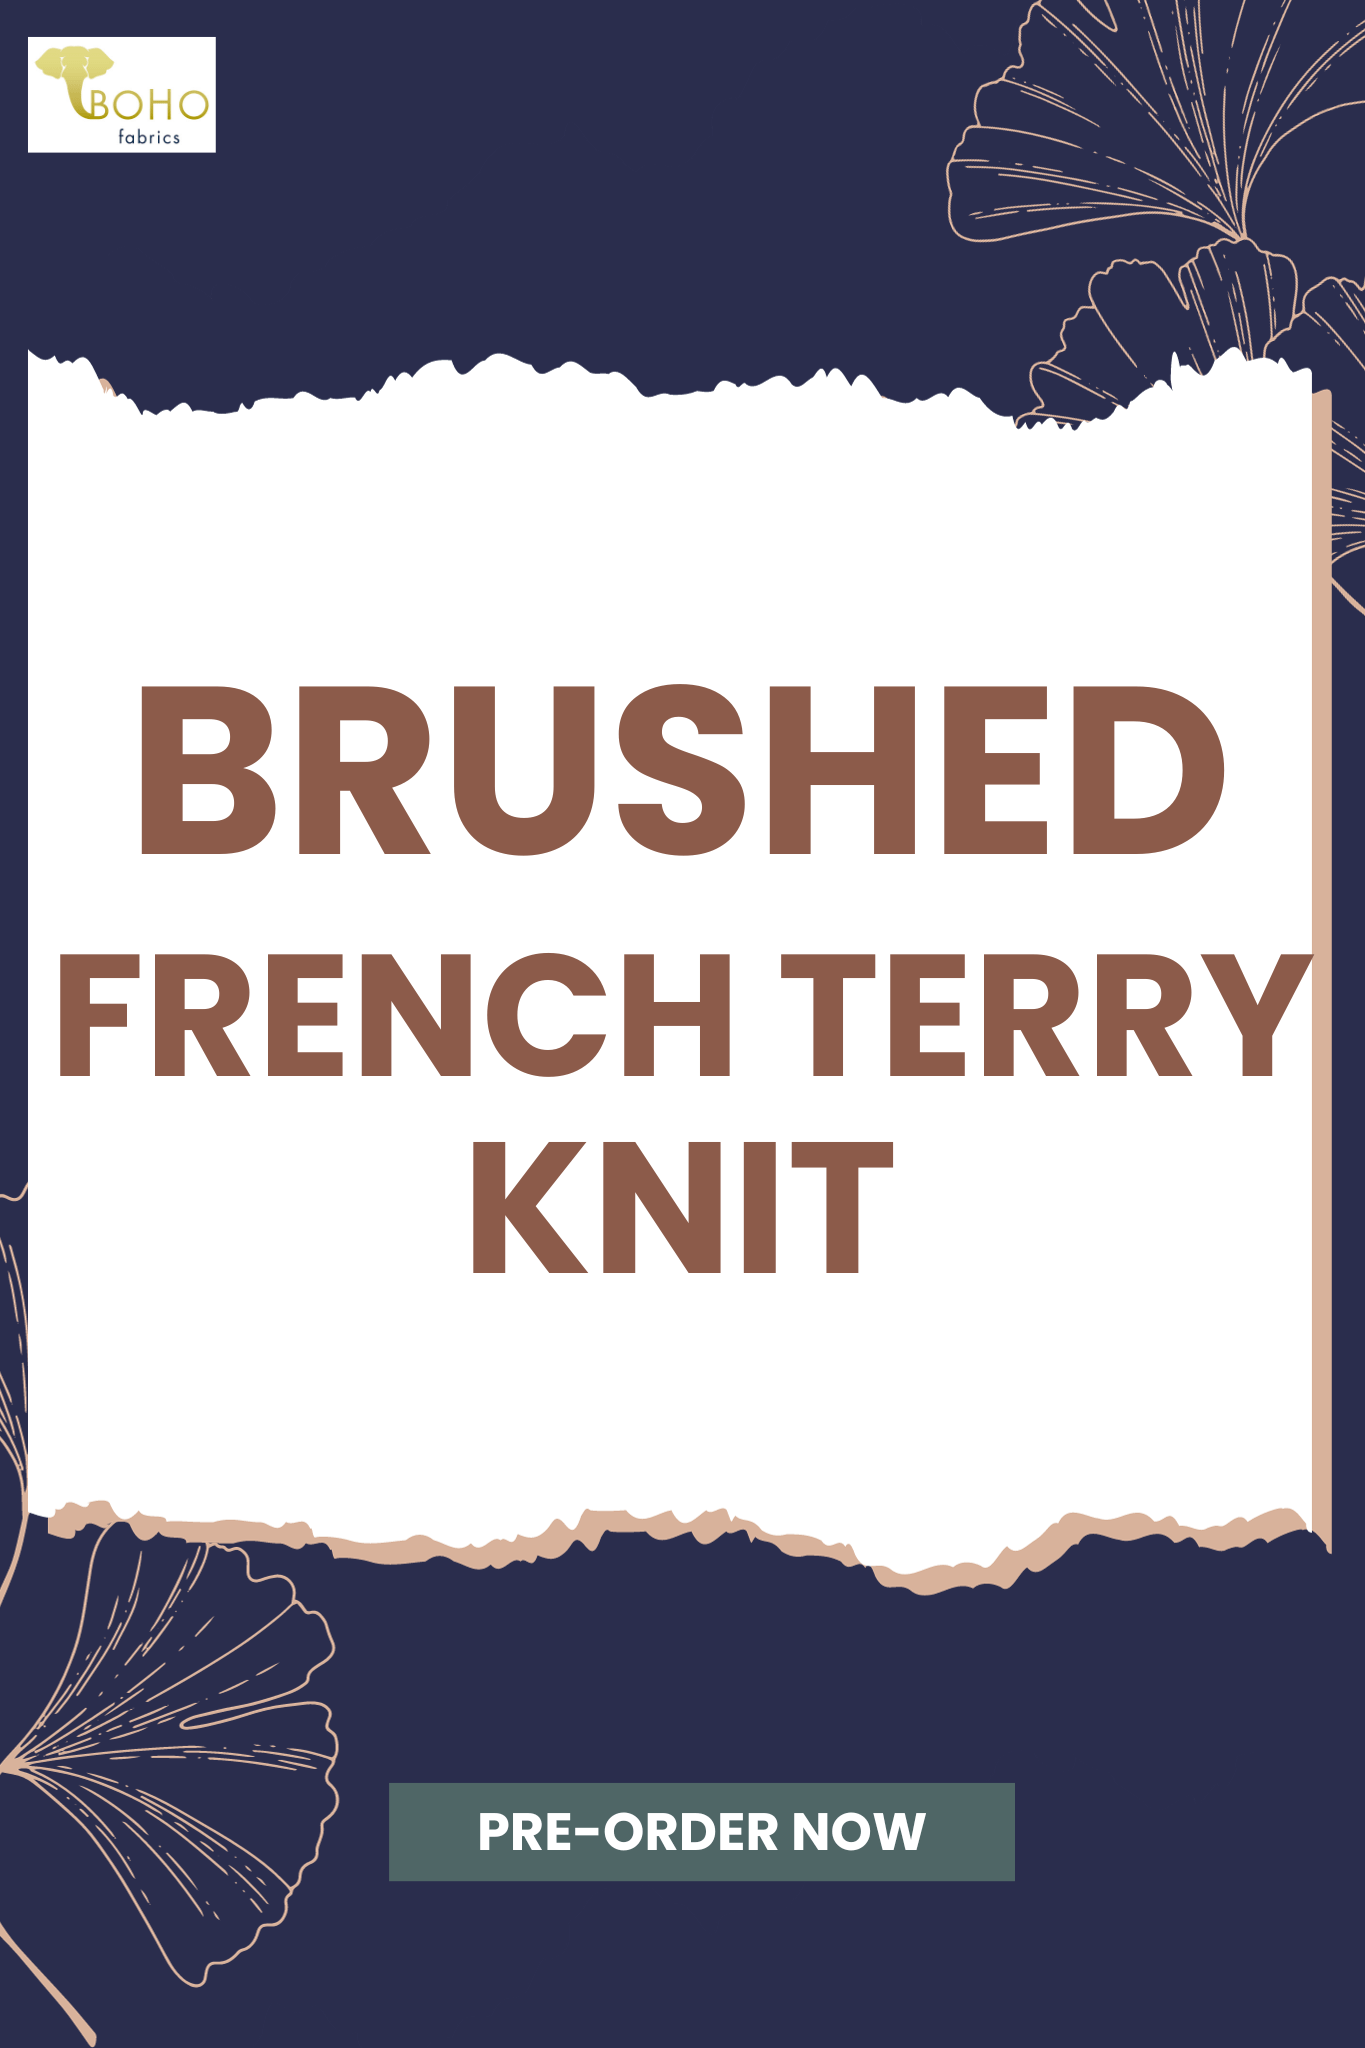 Brushed French Terry Solid Knit Fabric. - Boho Fabrics